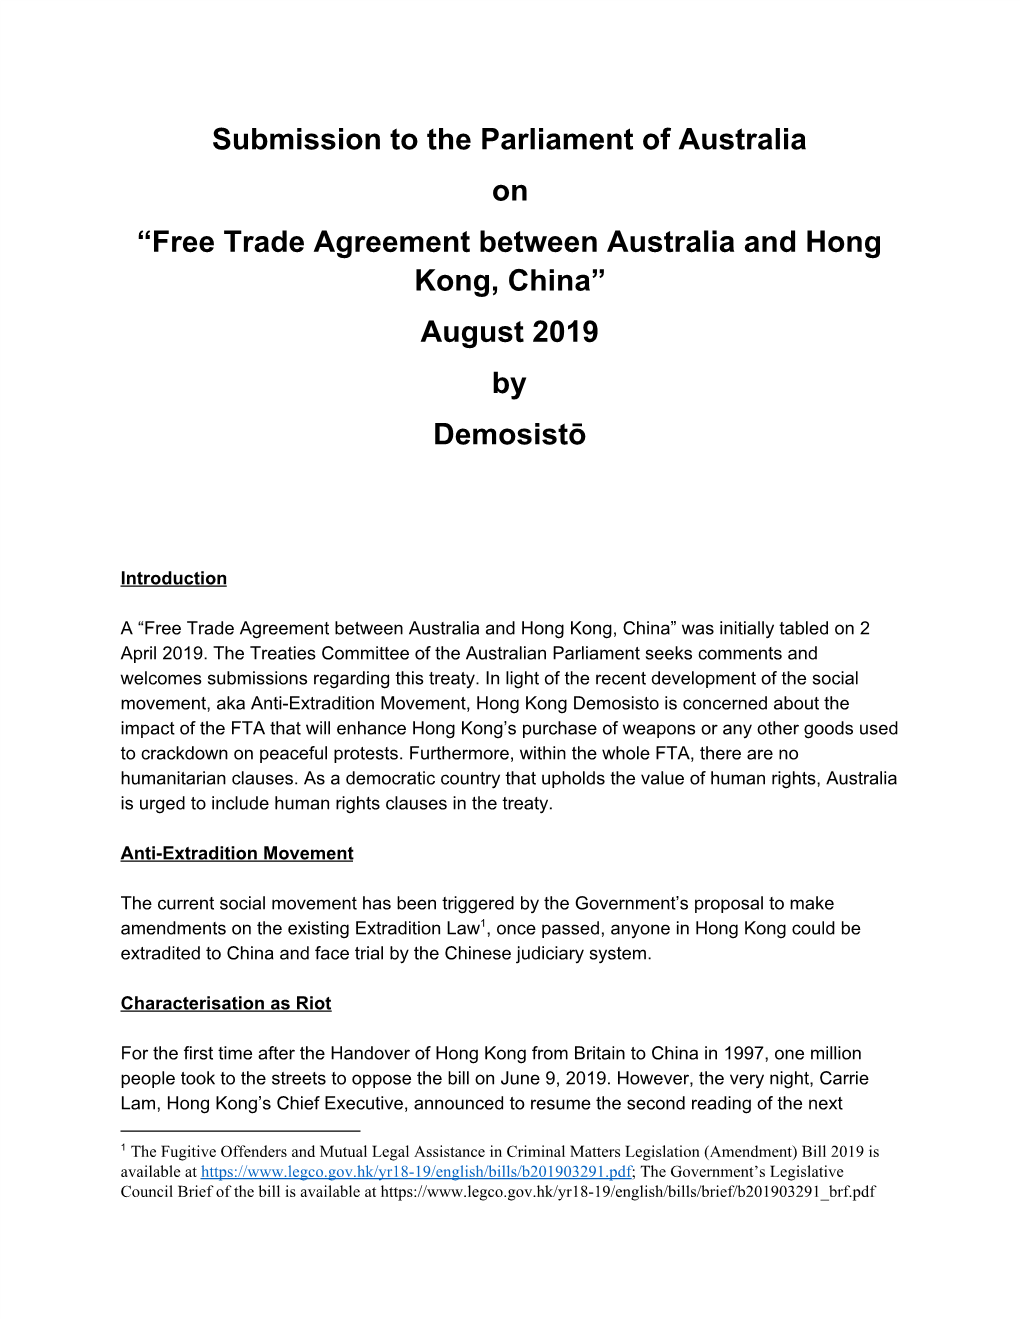 Free Trade Agreement Between Australia and Hong Kong, China” August 2019 by Demosistō